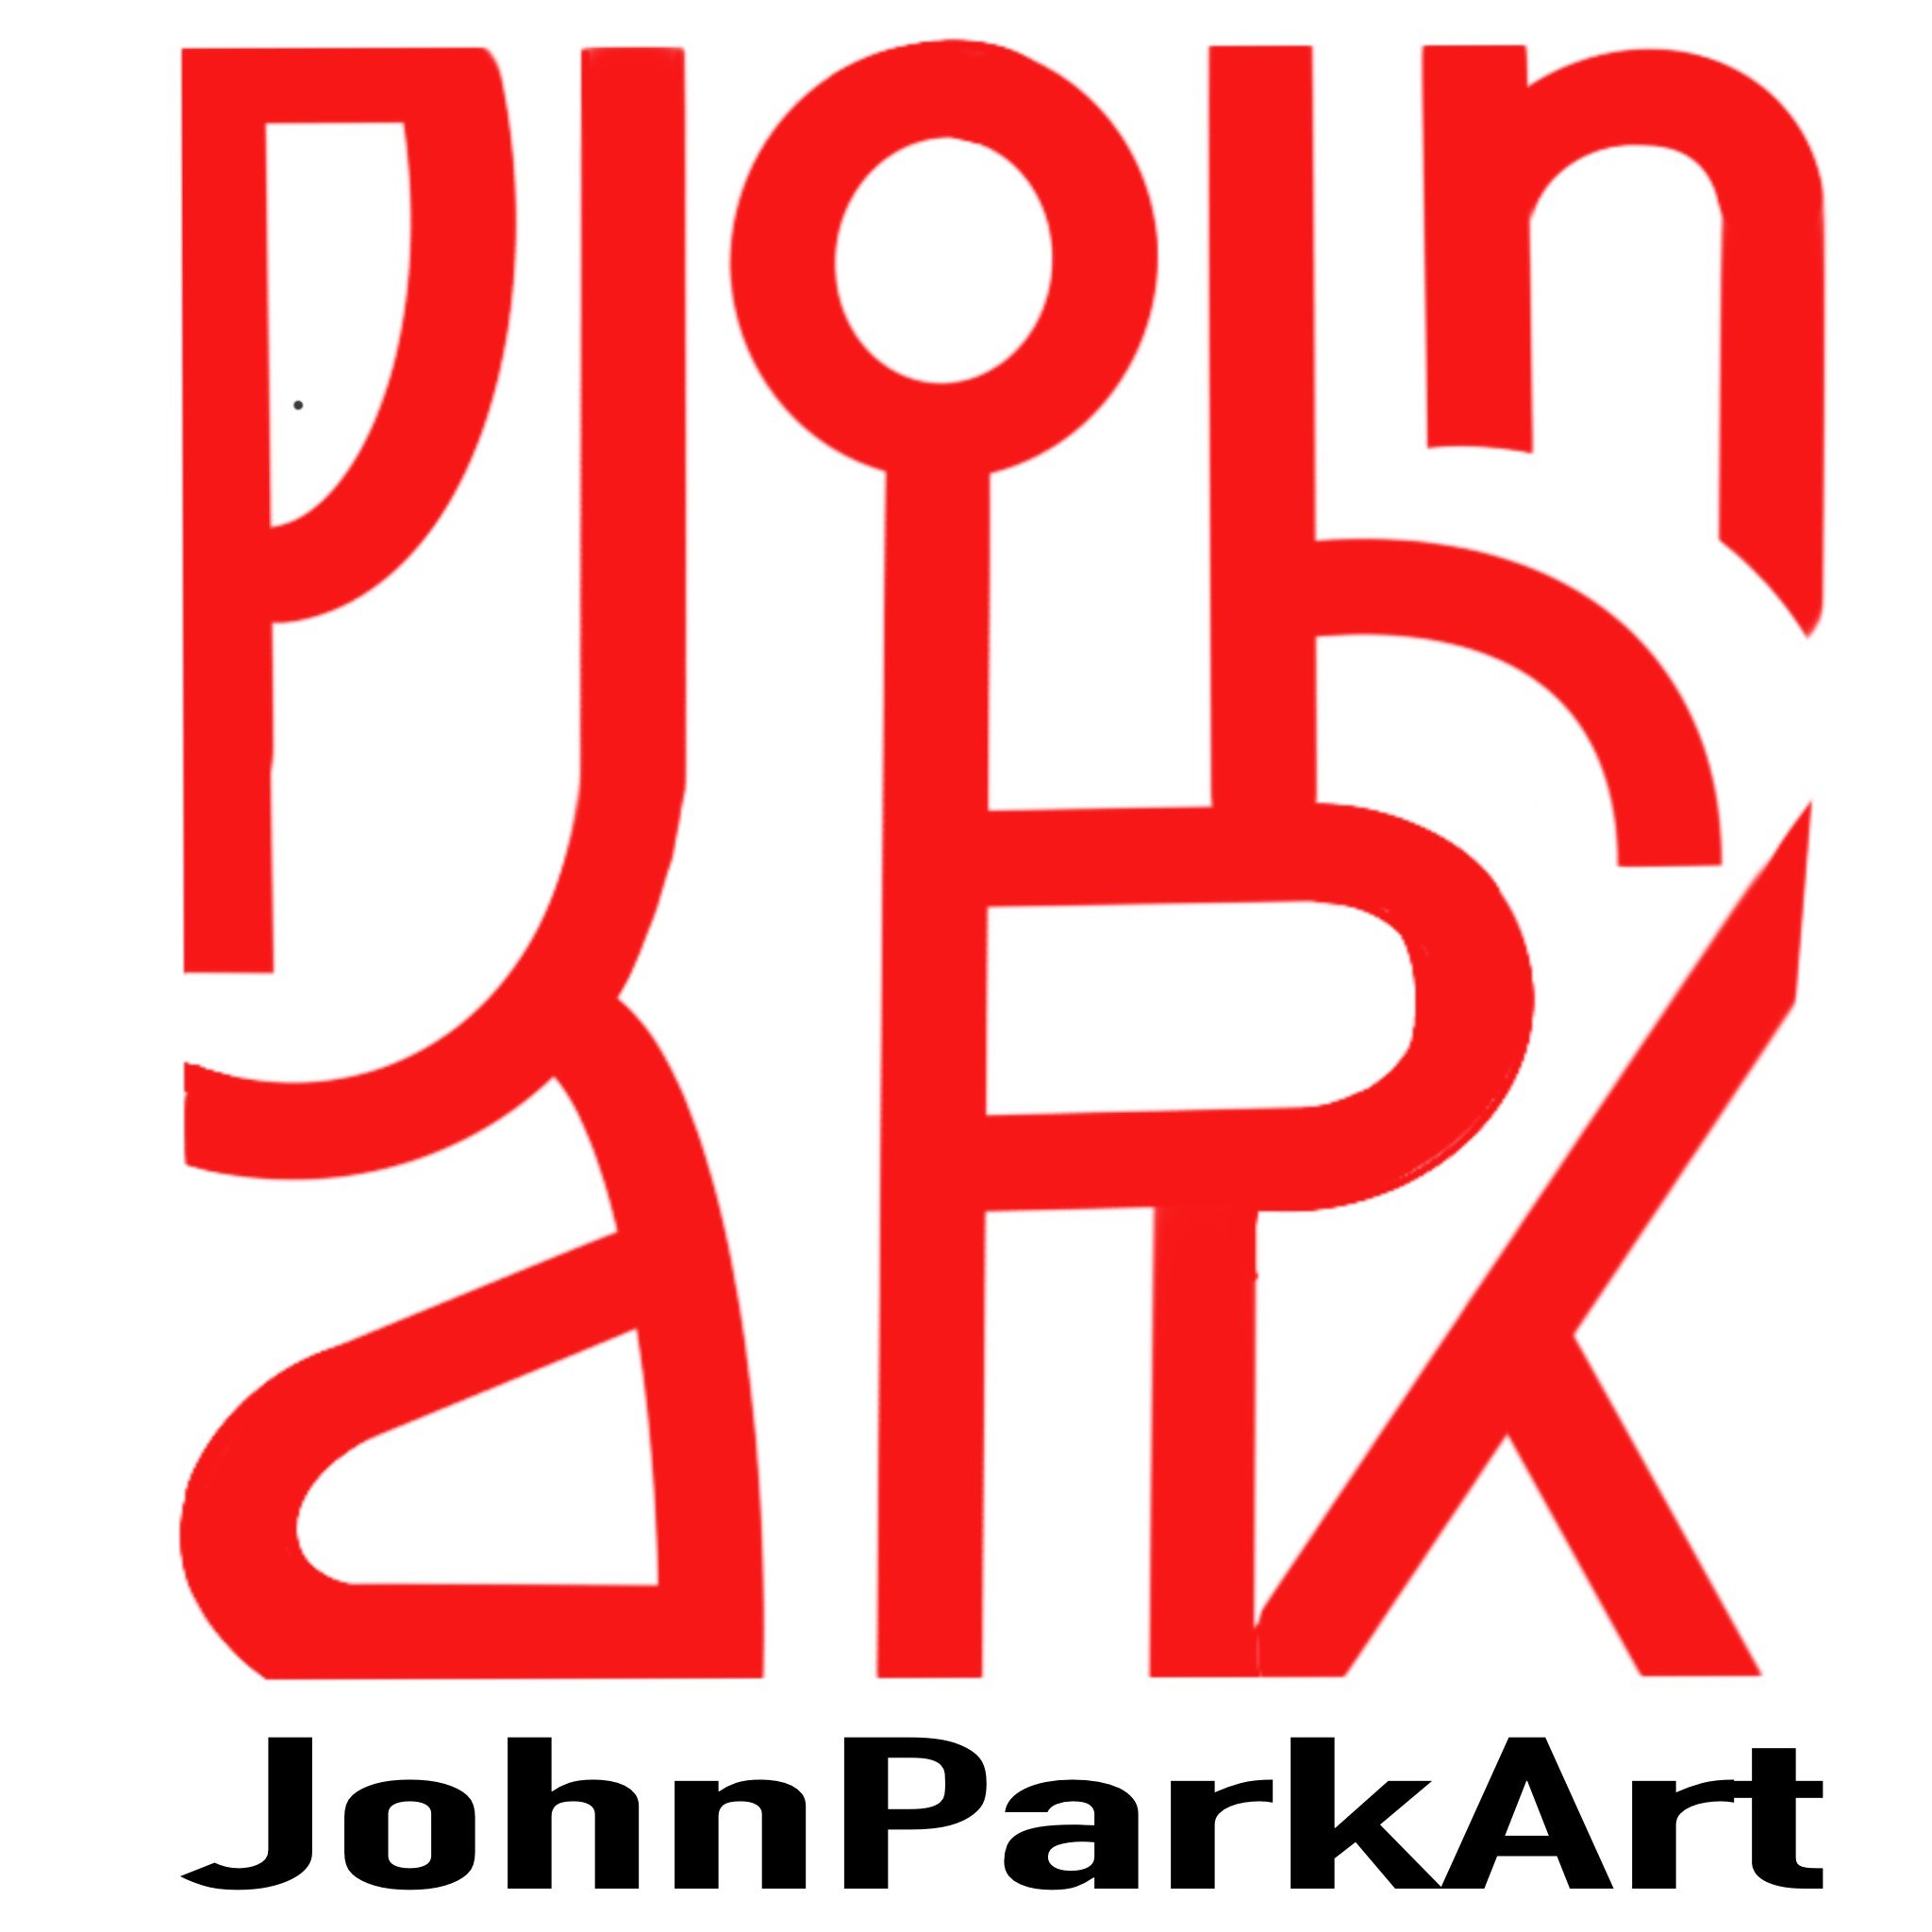 John Park Art